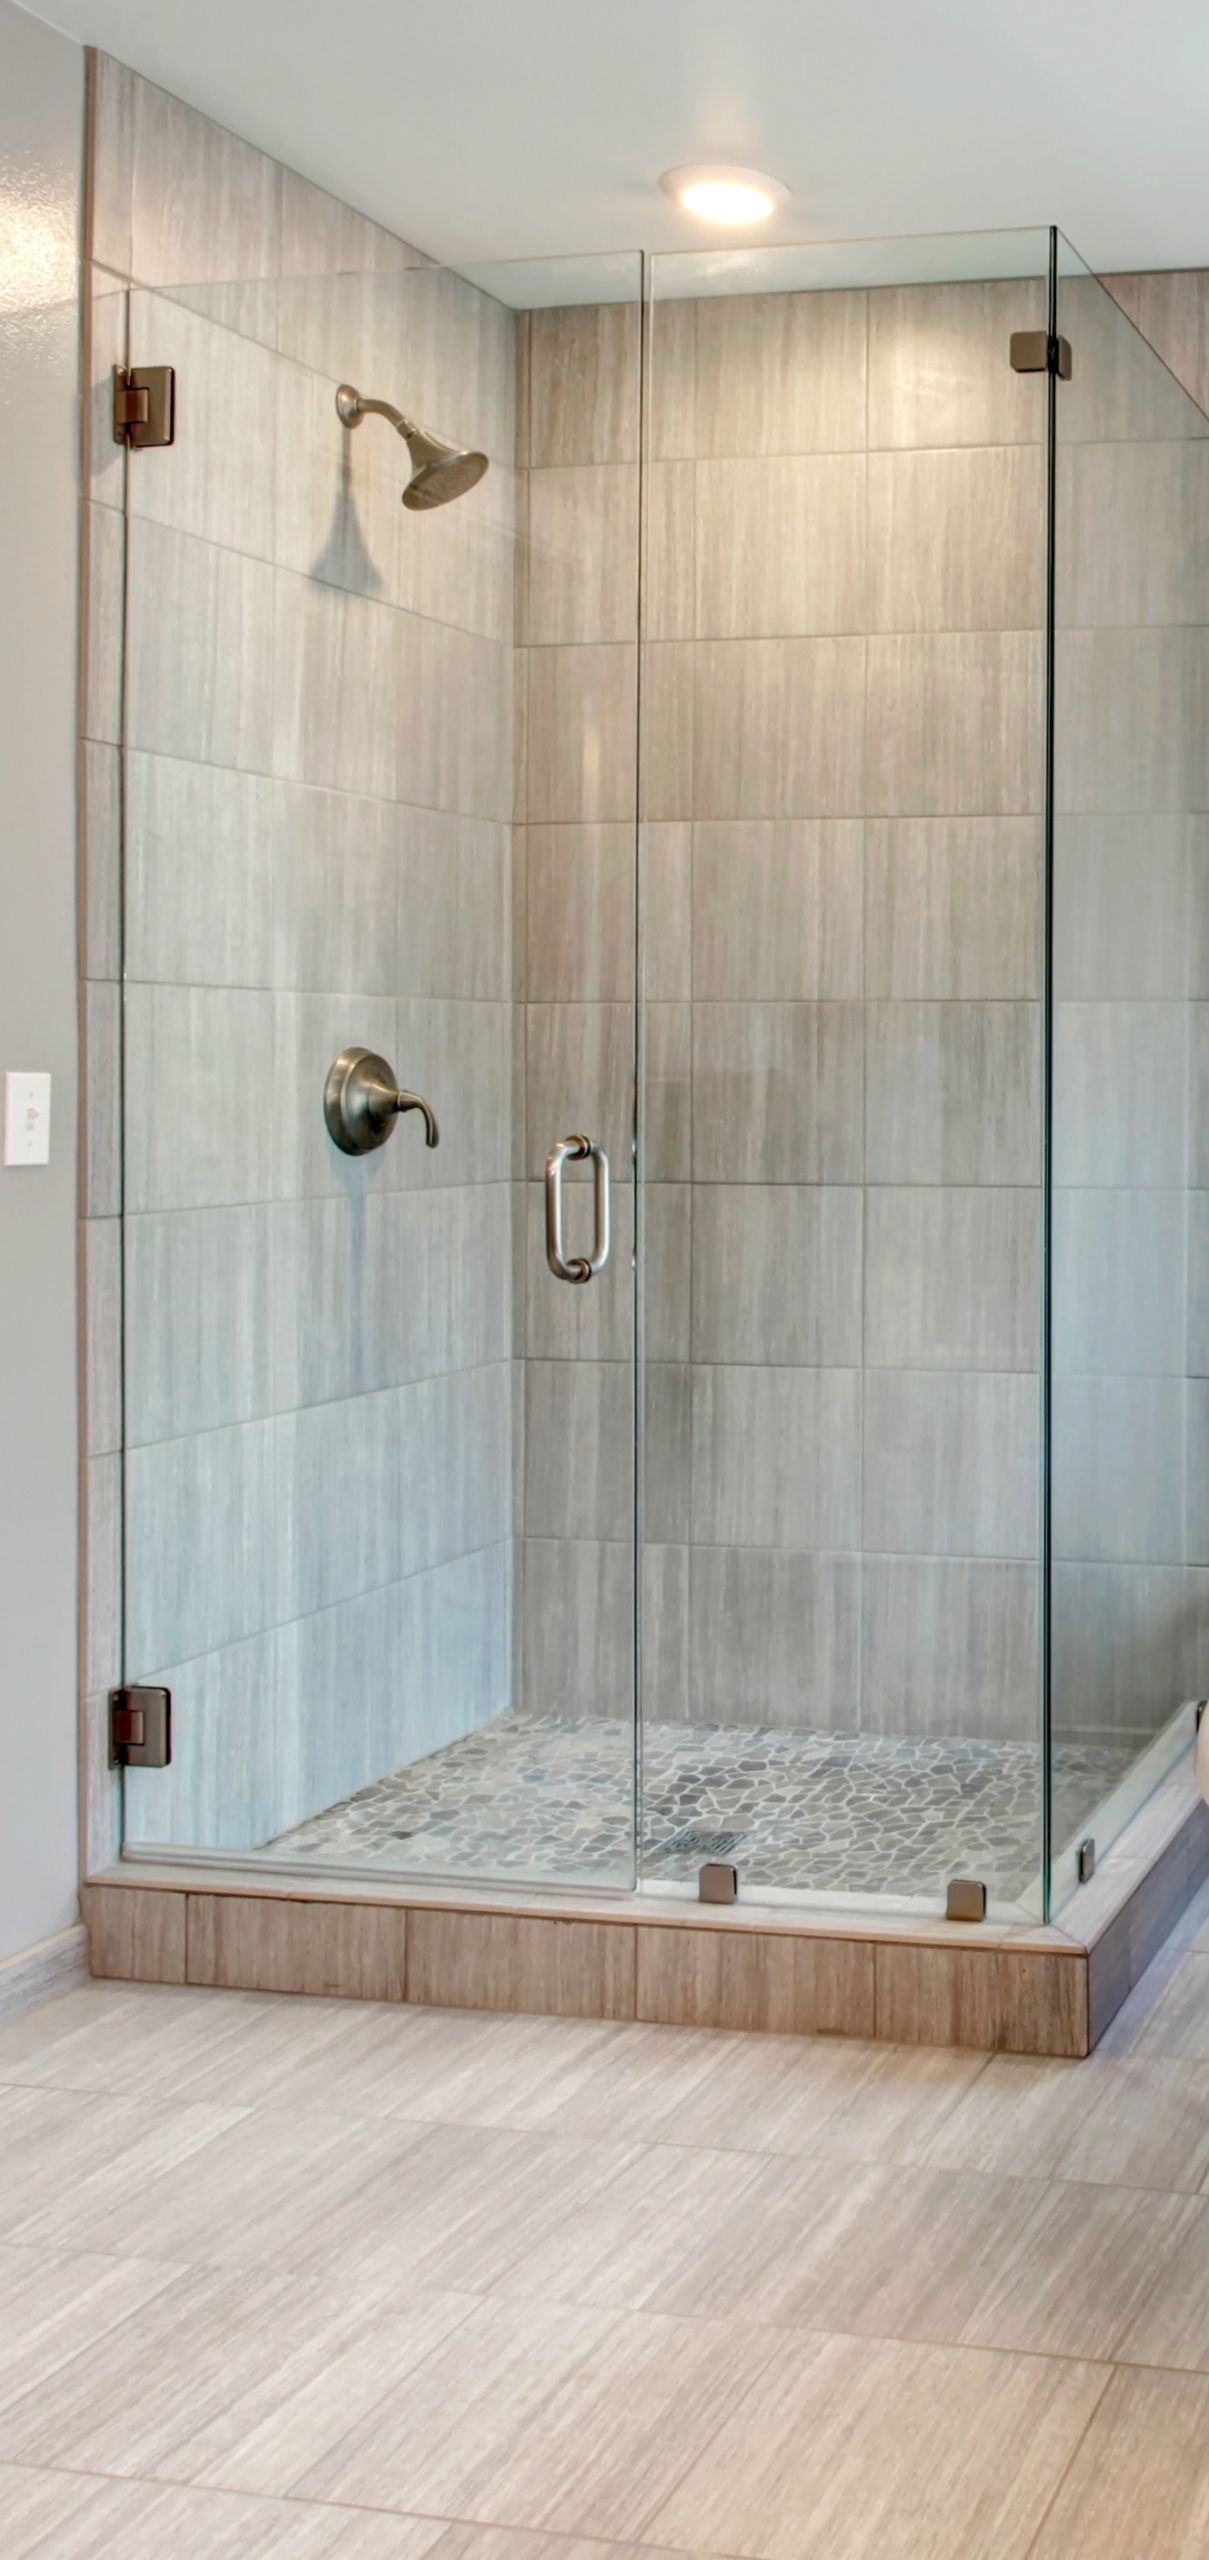 Bathroom Shower Units
 Home ficeDecoration